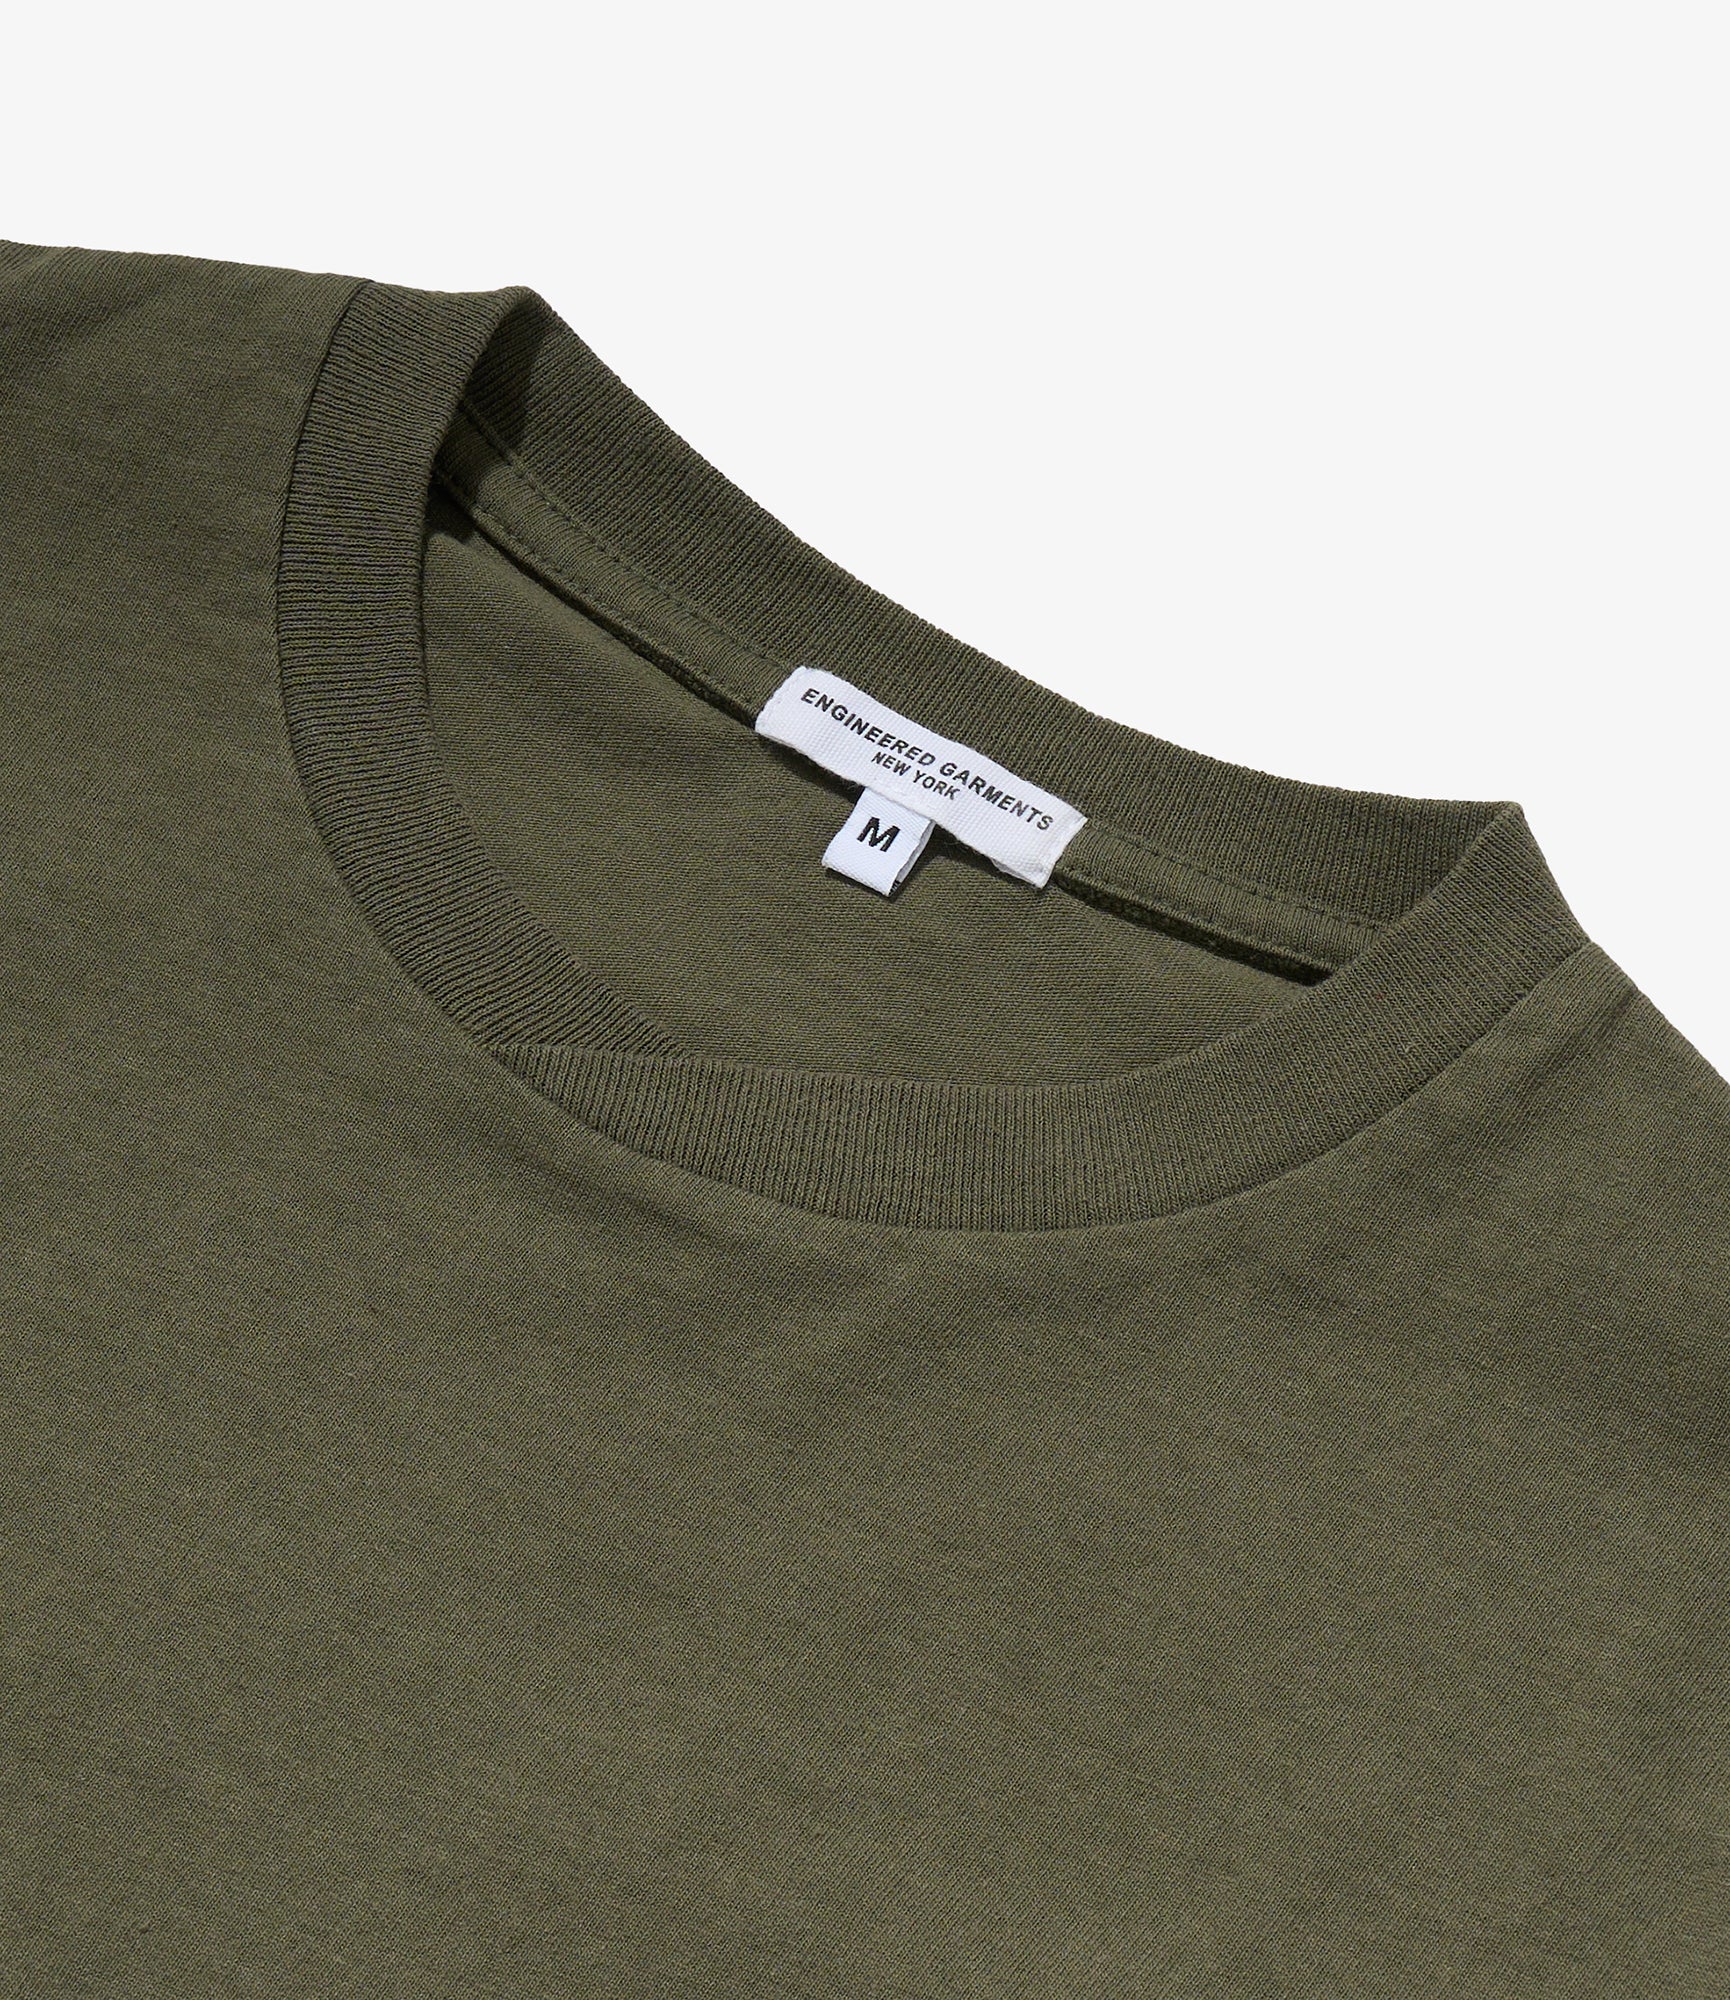 Printed Cross Crew Neck Pocket T-shirt - Olive - Graffiti